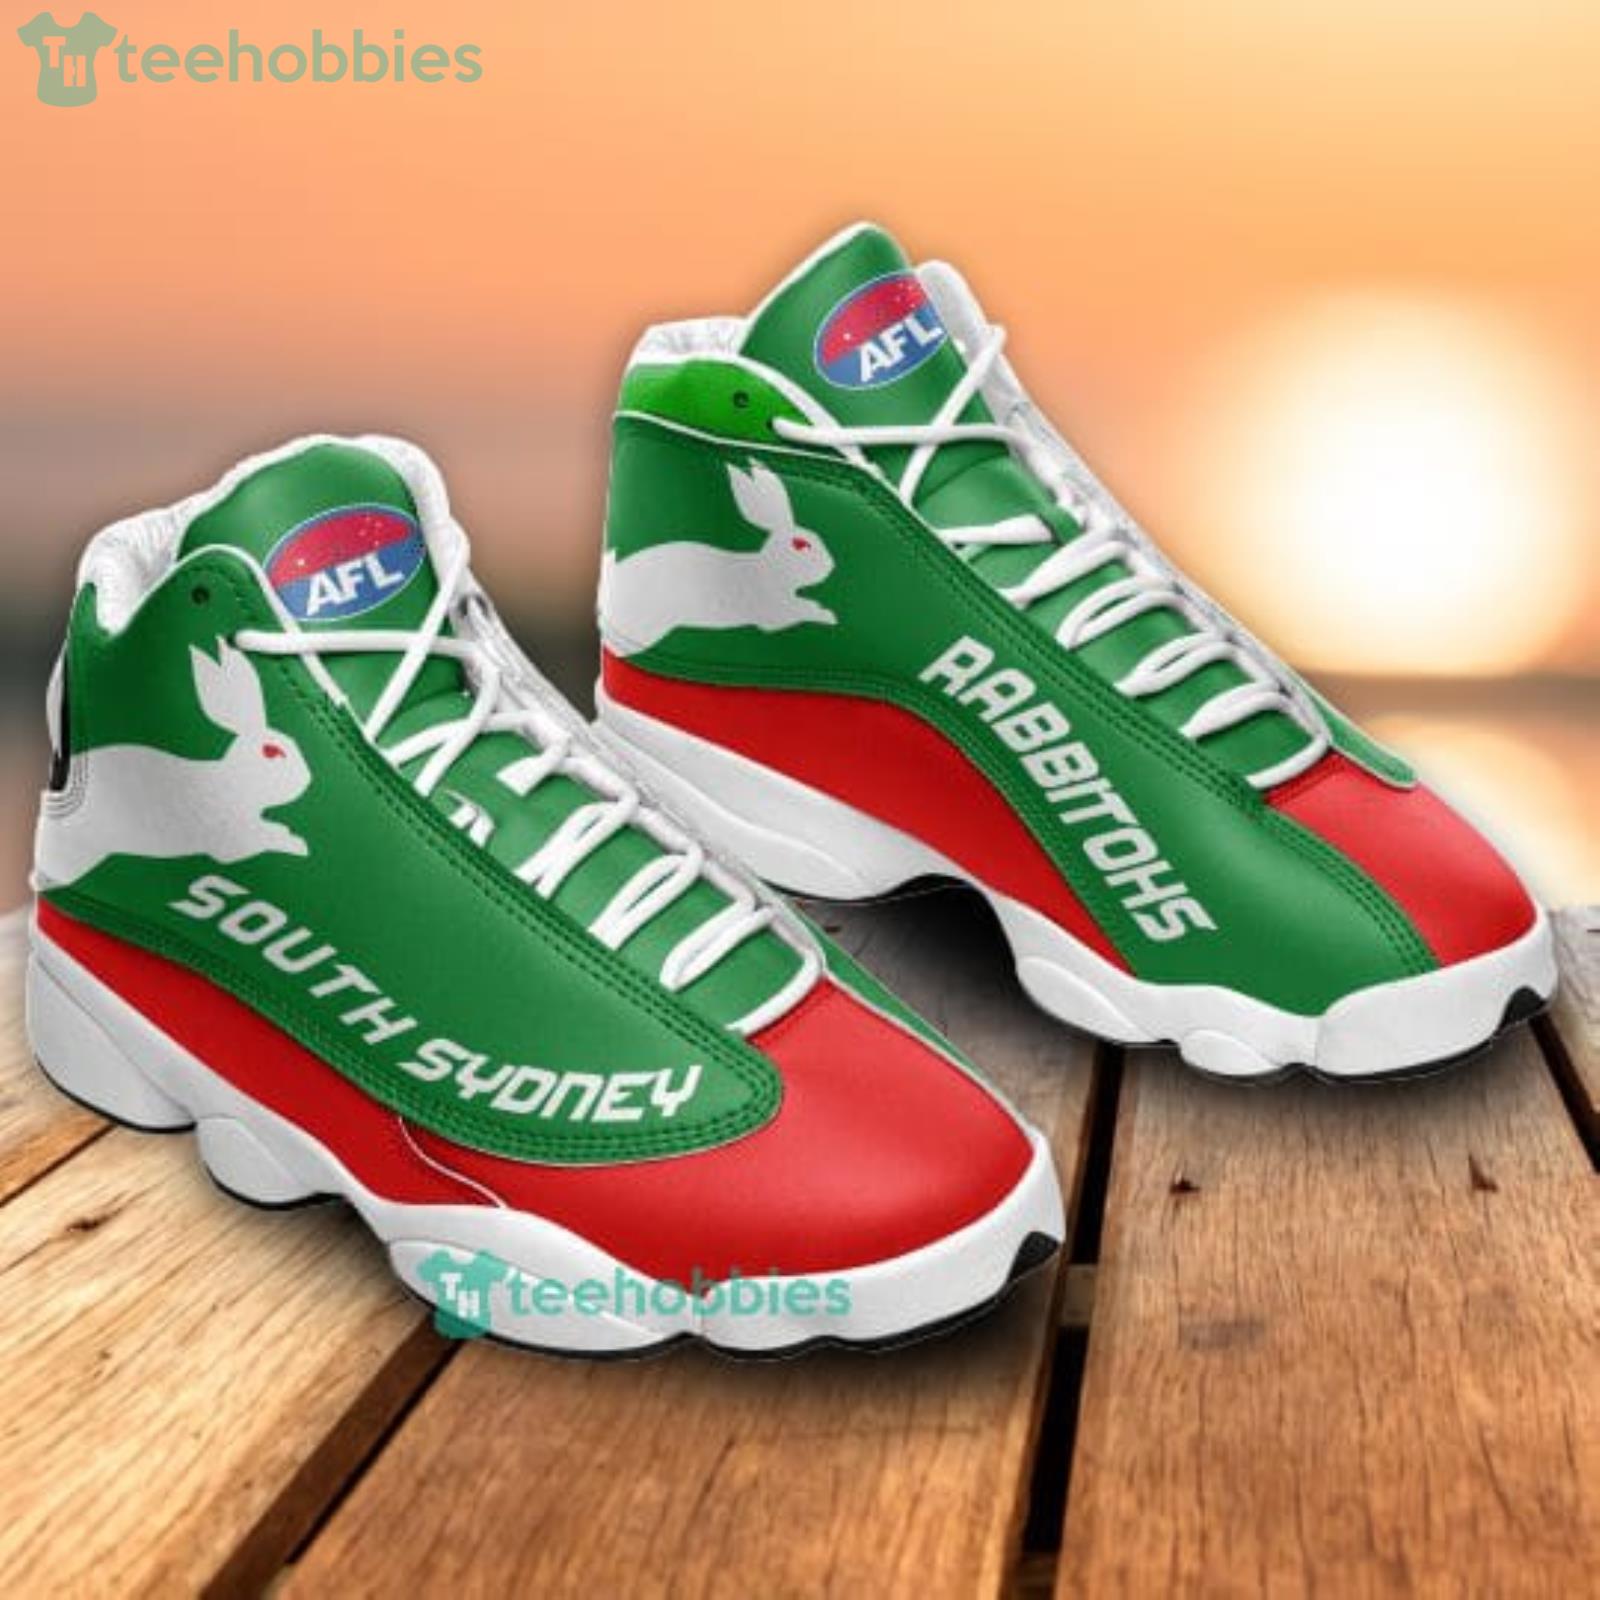 NRL South Sydney Rabbitohs Green Red Air Jordan 13 Shoes Running Sneaker For Fans